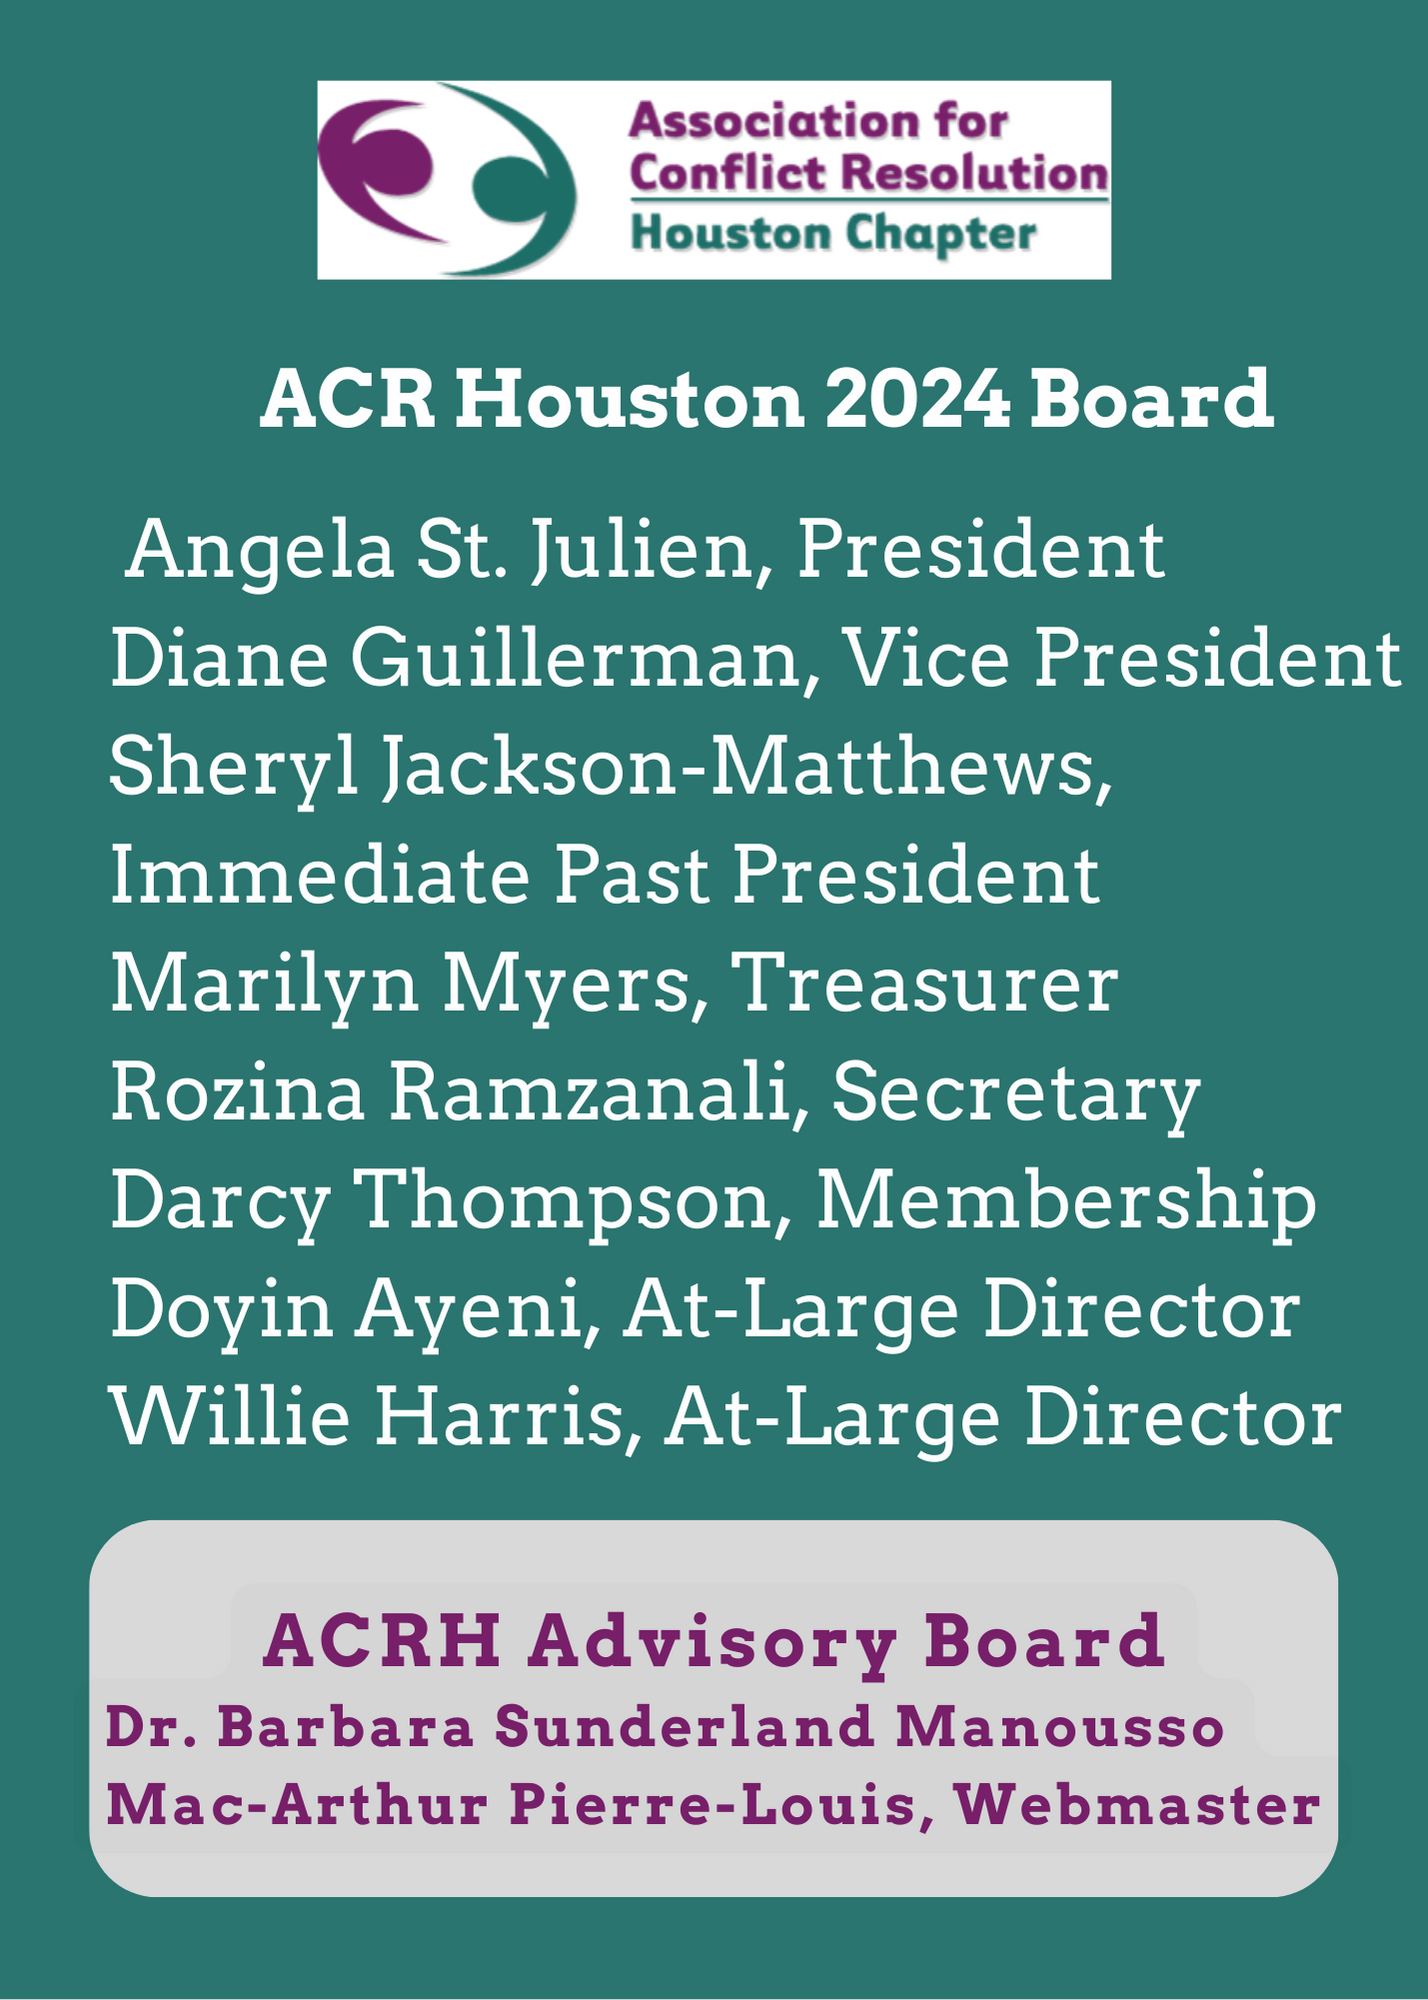 Welcome 2024 Board Members!